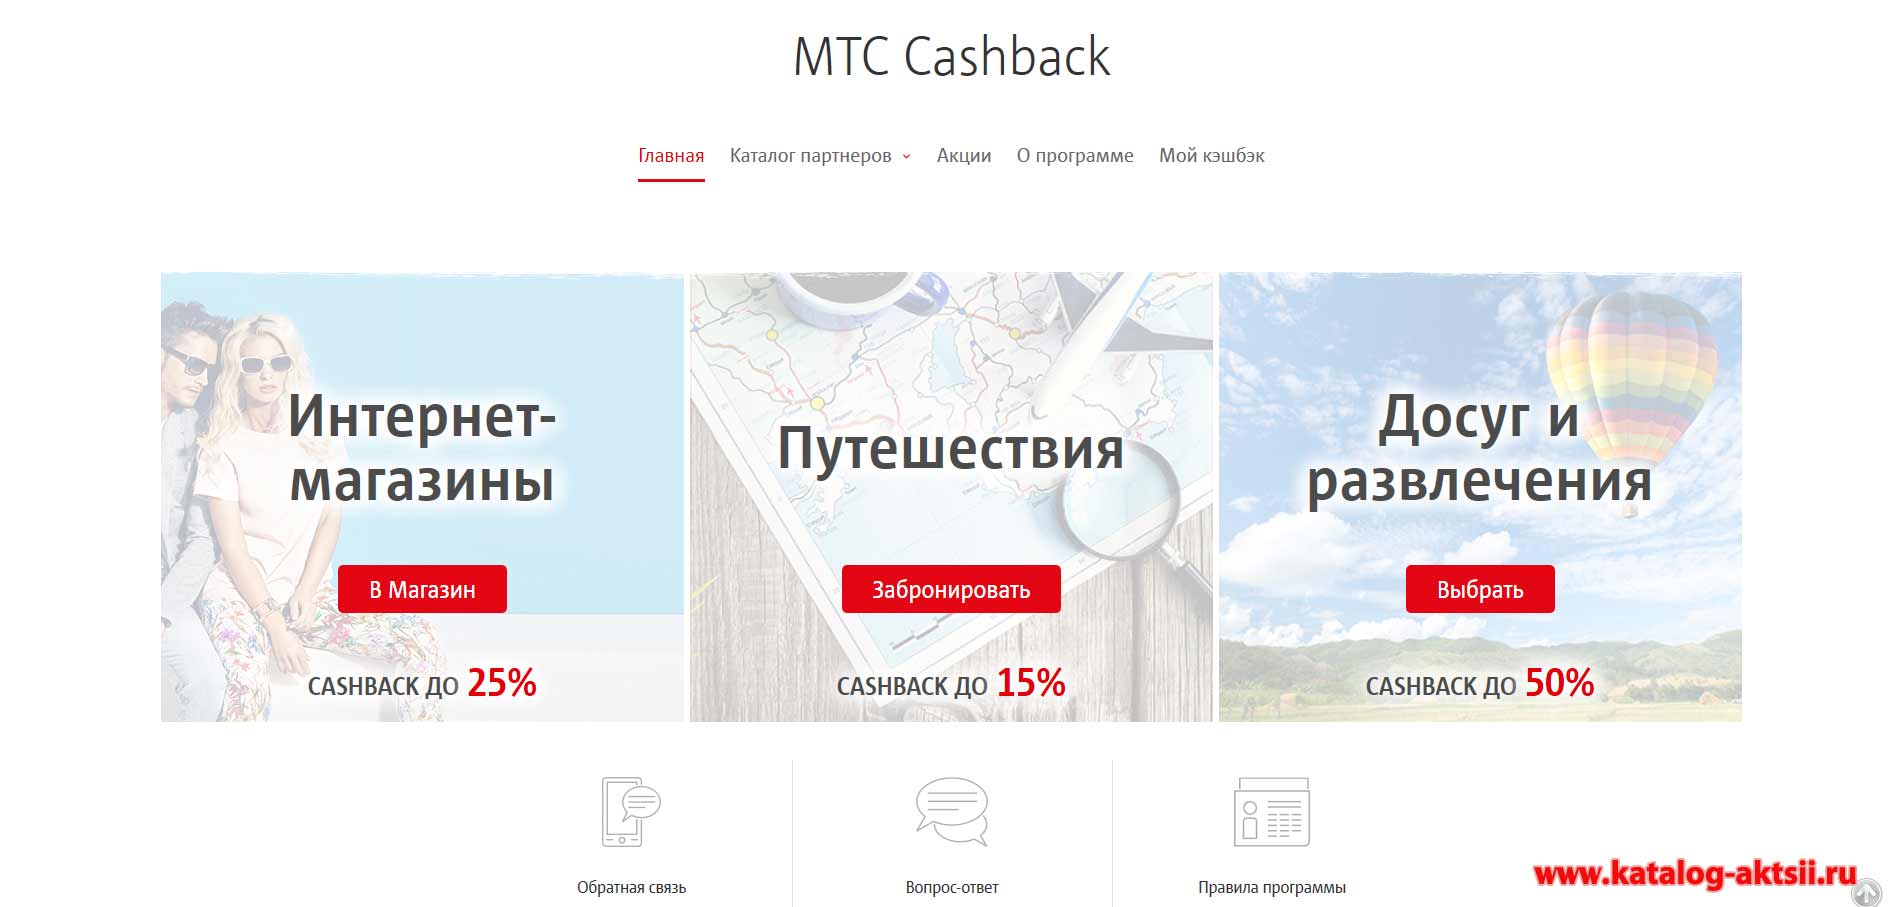 www.cashback.mts.ru : Регистрация - отзывы